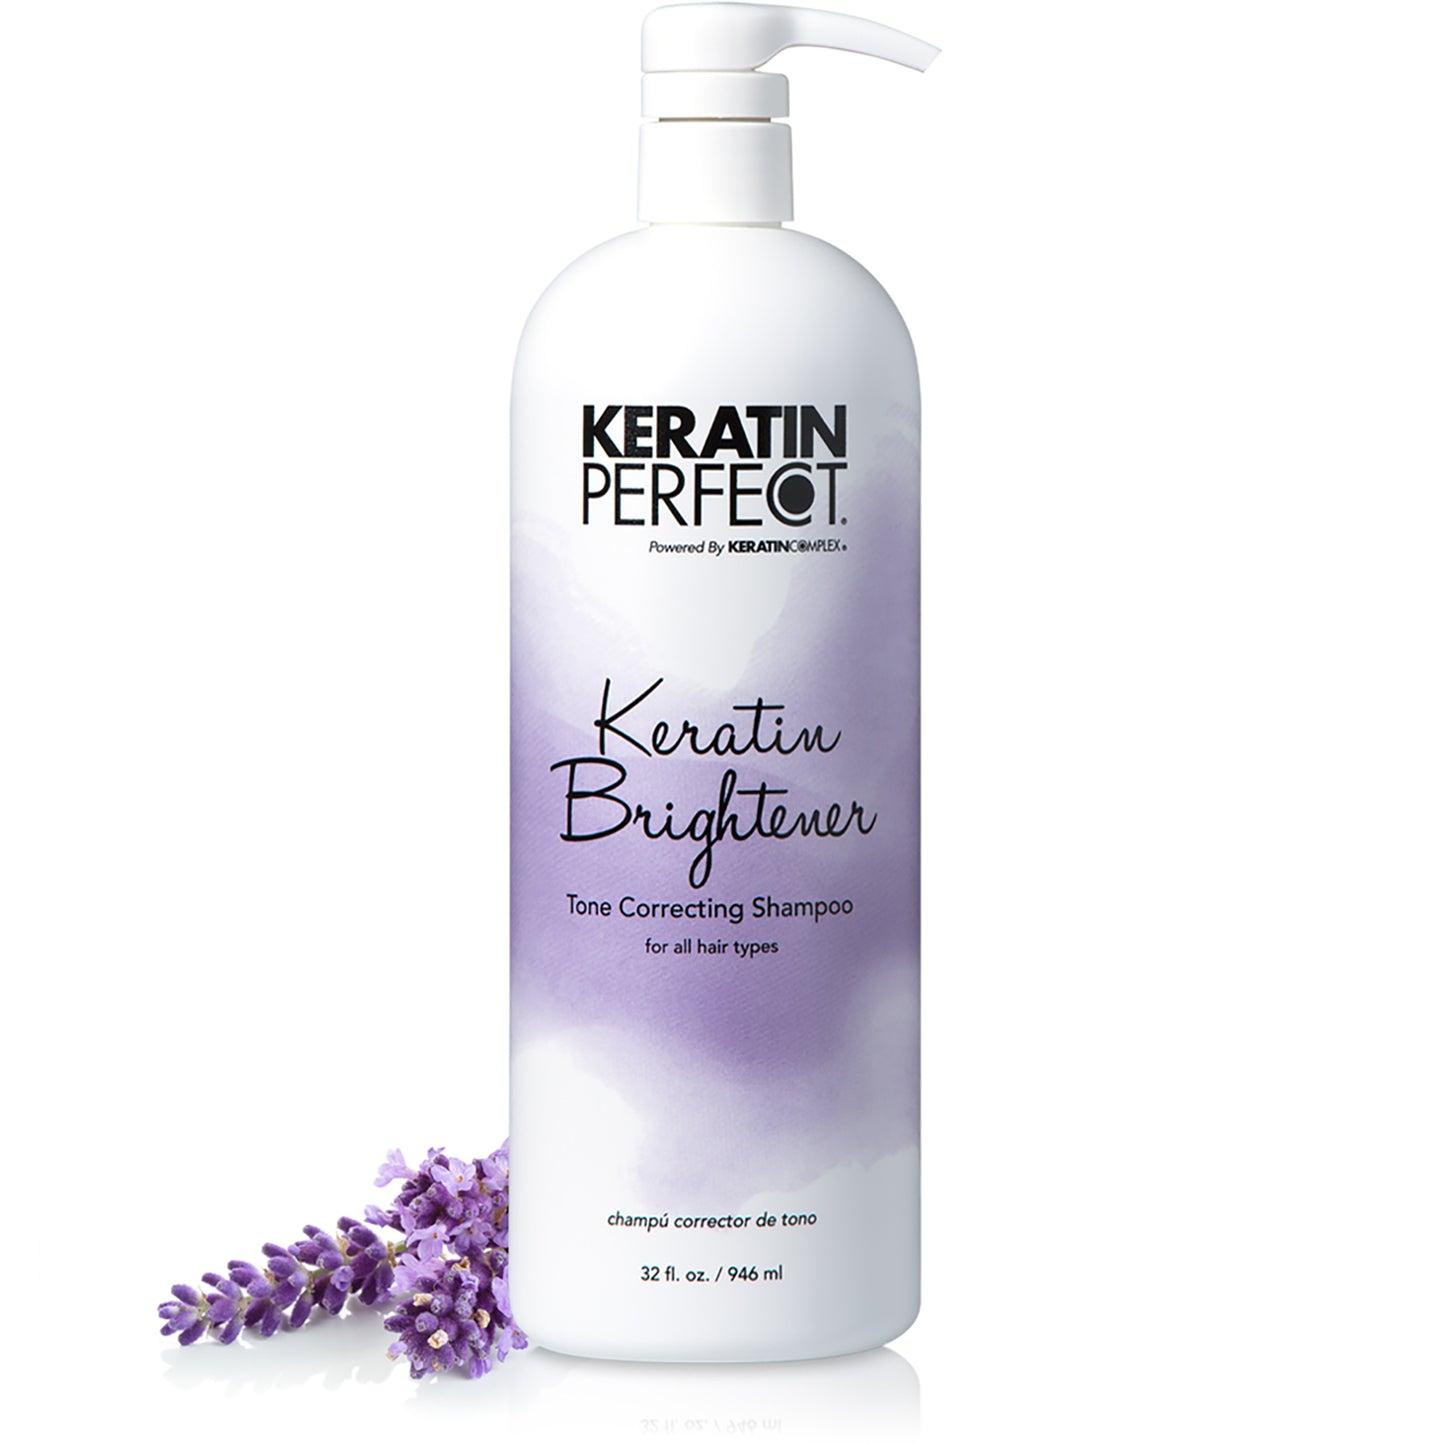 Keratin Brightener Tone Correcting Shampoo